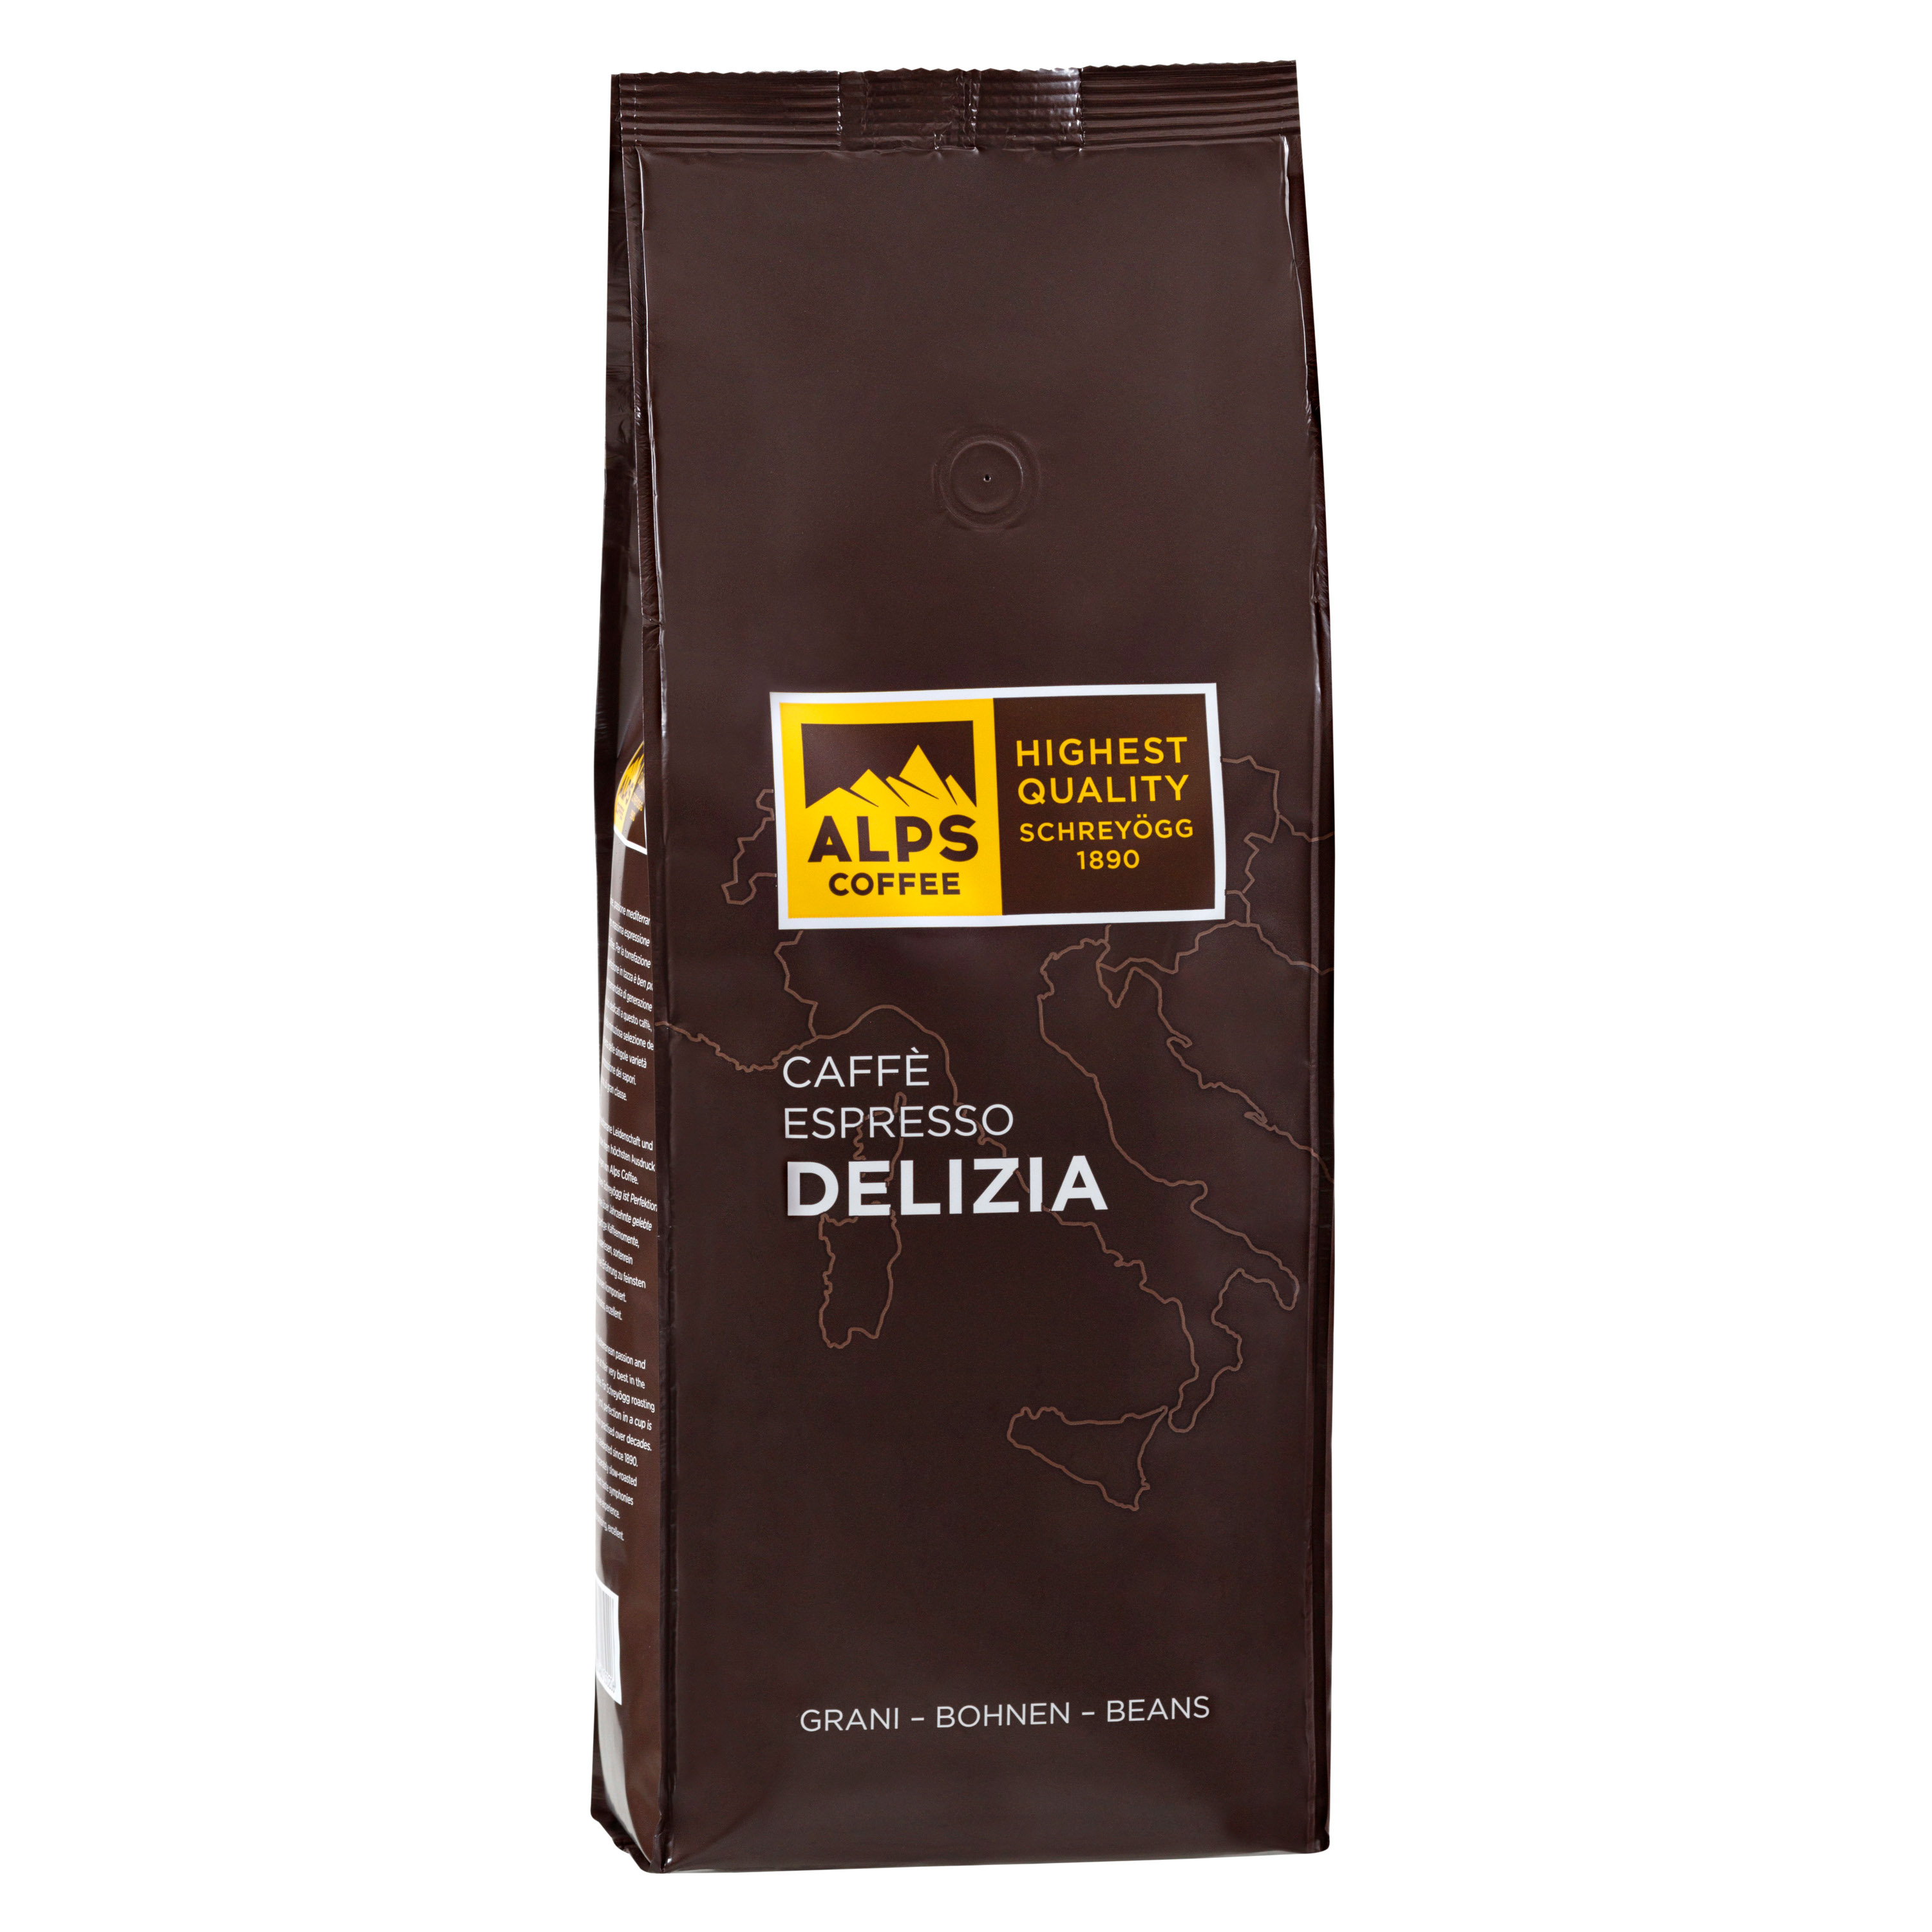 Alps Coffee Delizia Caffè Espresso 1kg Bohnen